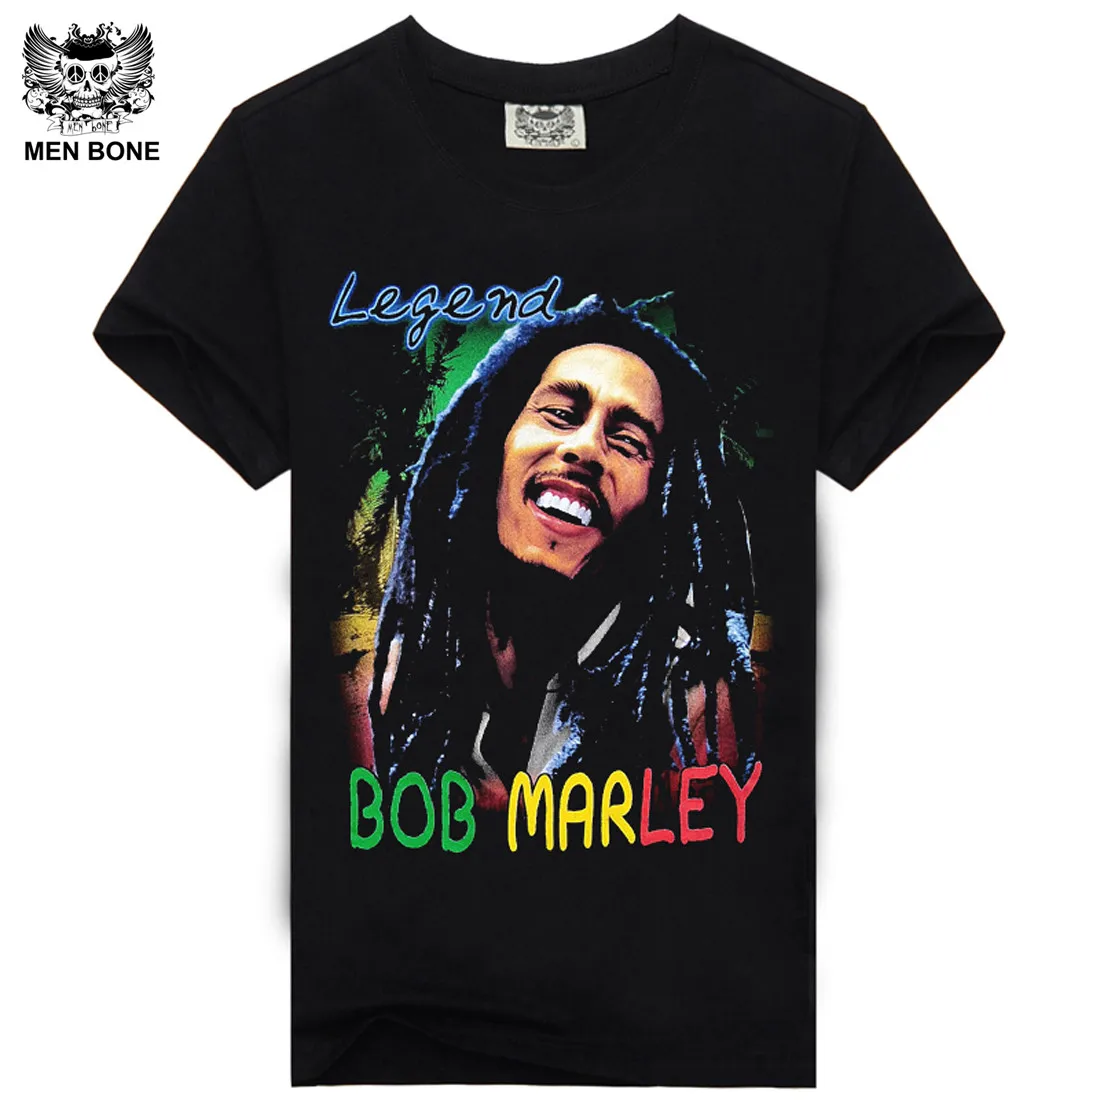 [Männer knochen] Mens casual shirt neue stil gedruckt t-shirt BOB Marley neuesten shirt designs für männer rock Schwarz t-shirt freies verschiffen